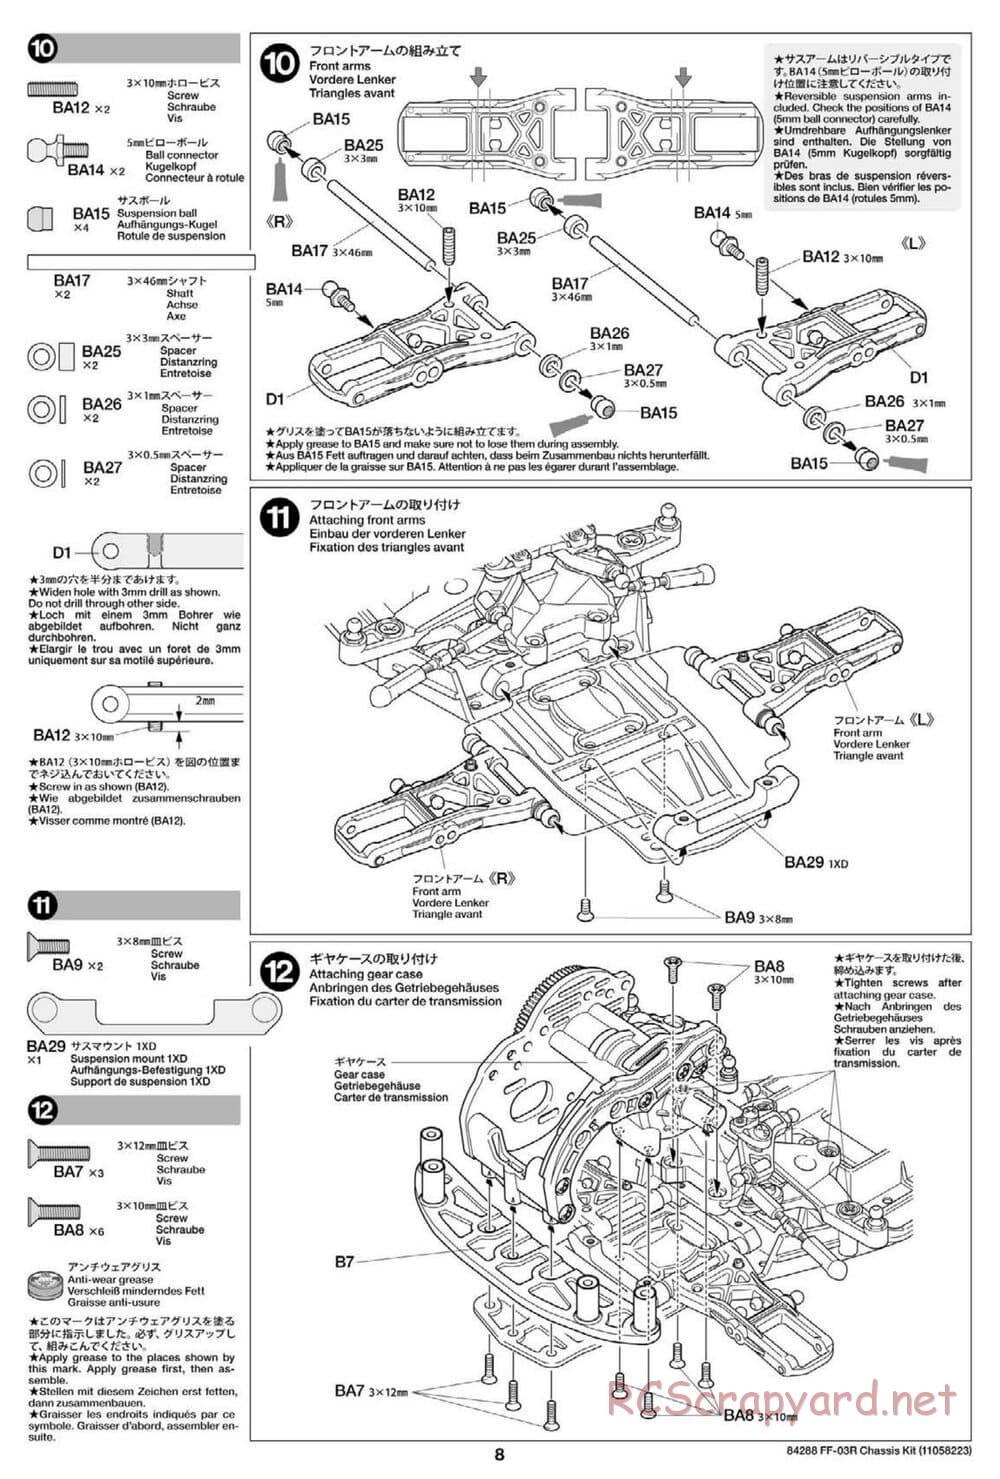 Tamiya - FF-03R Chassis - Manual - Page 10